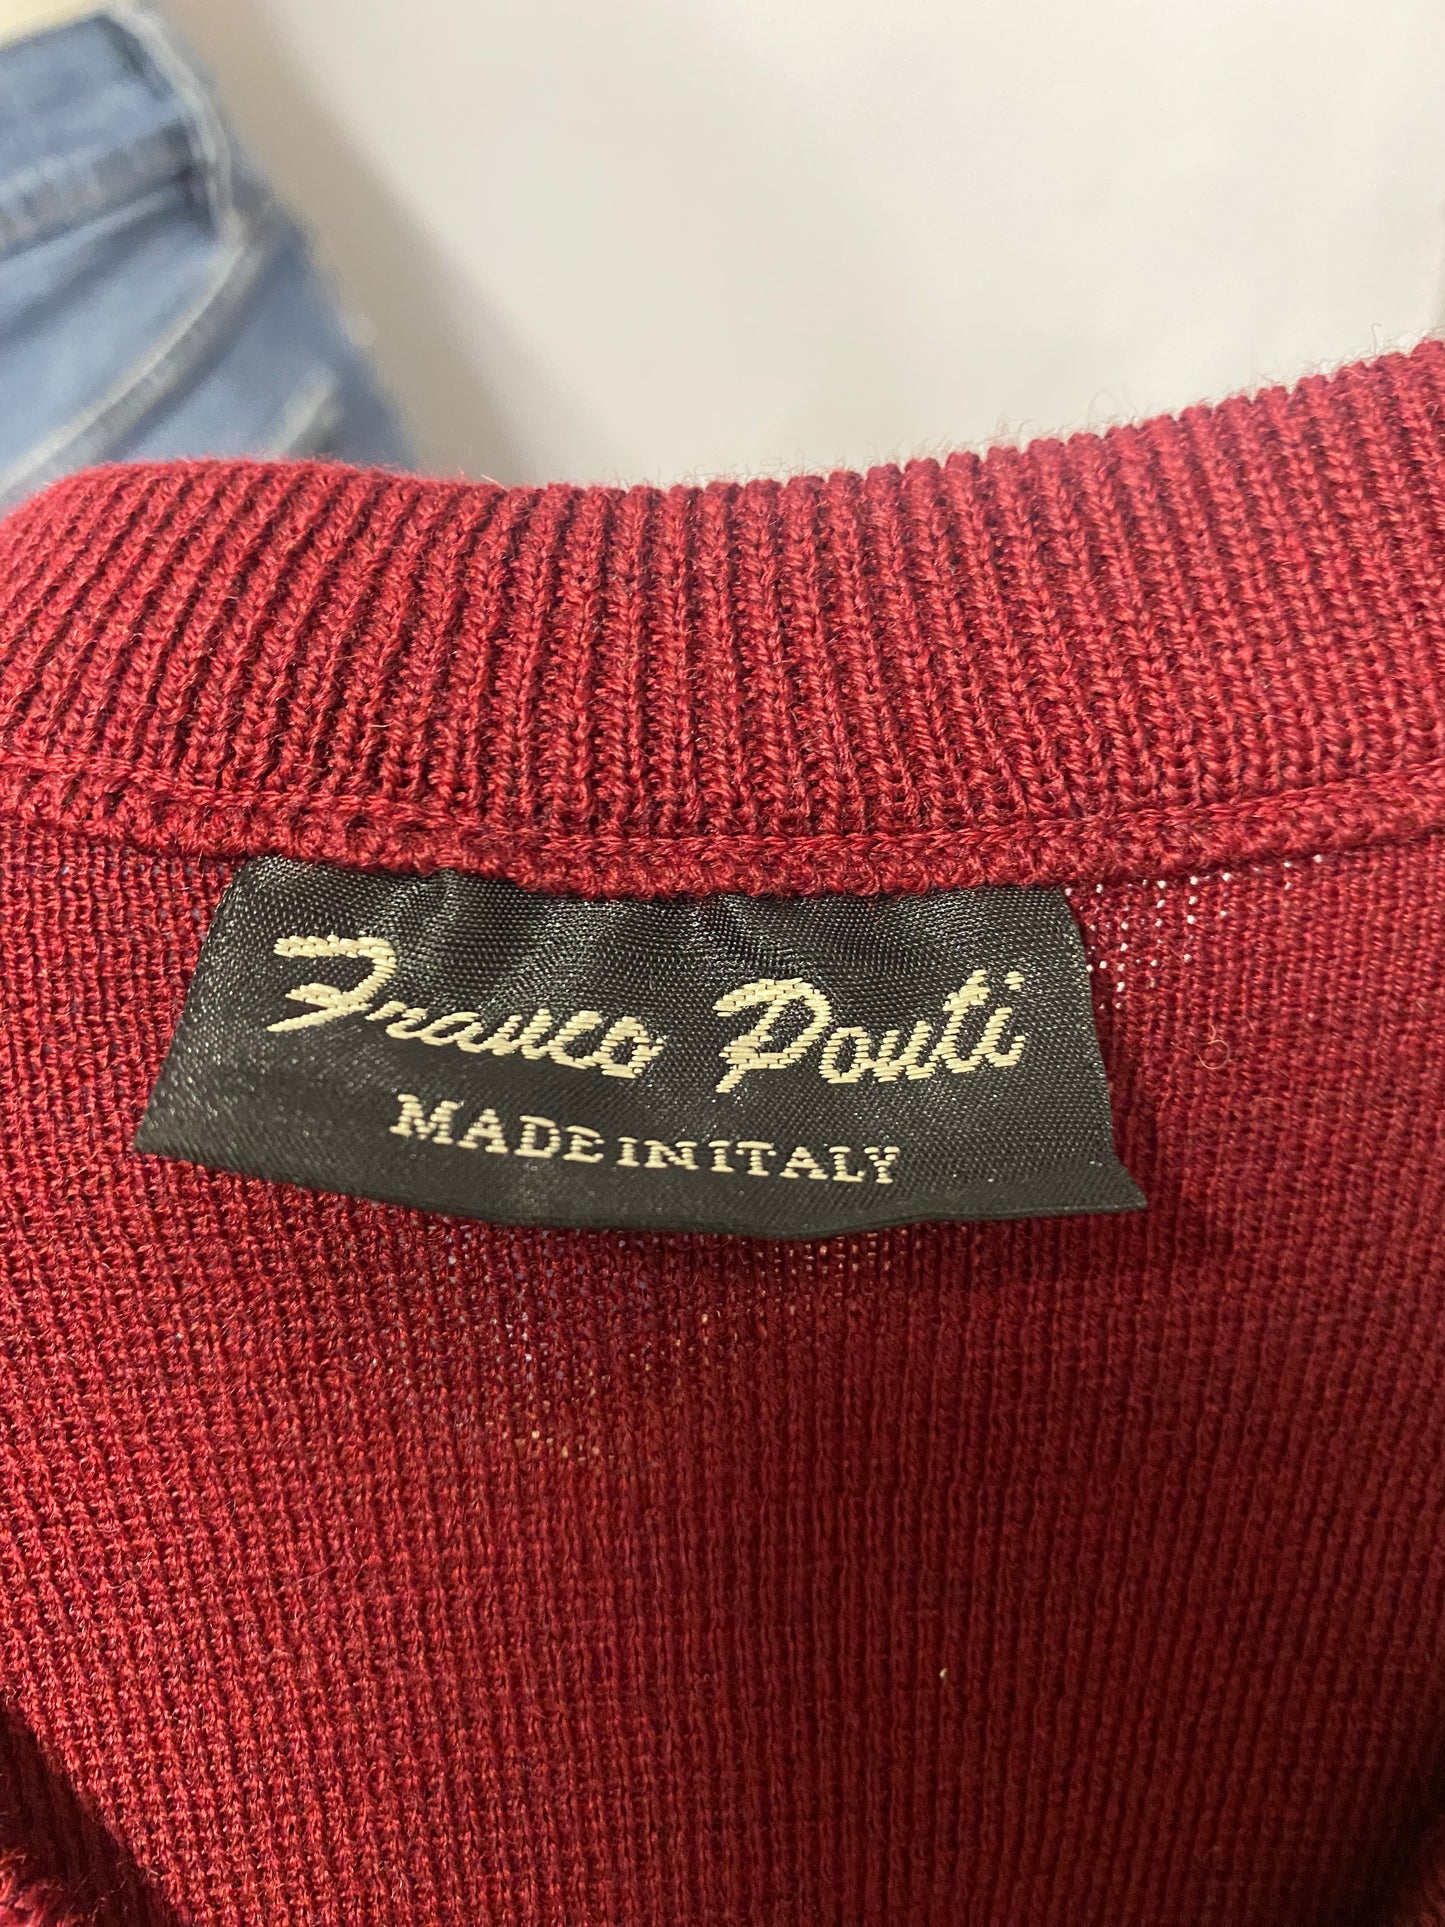 Franco Pouti Maroon Italian Knit Sweater V-neck Small